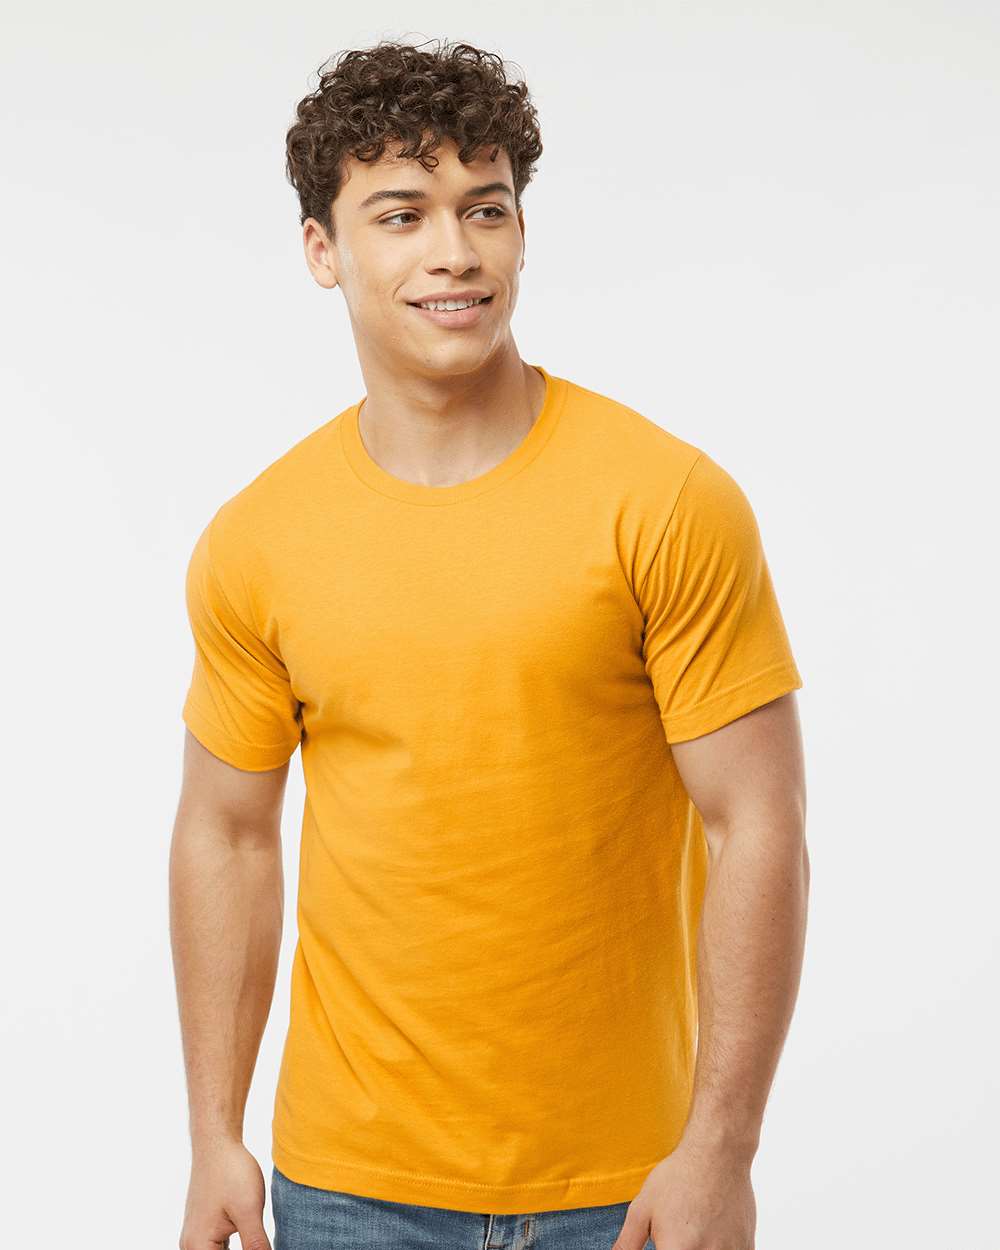 Tultex - Unisex Fine Jersey T-Shirt - 202